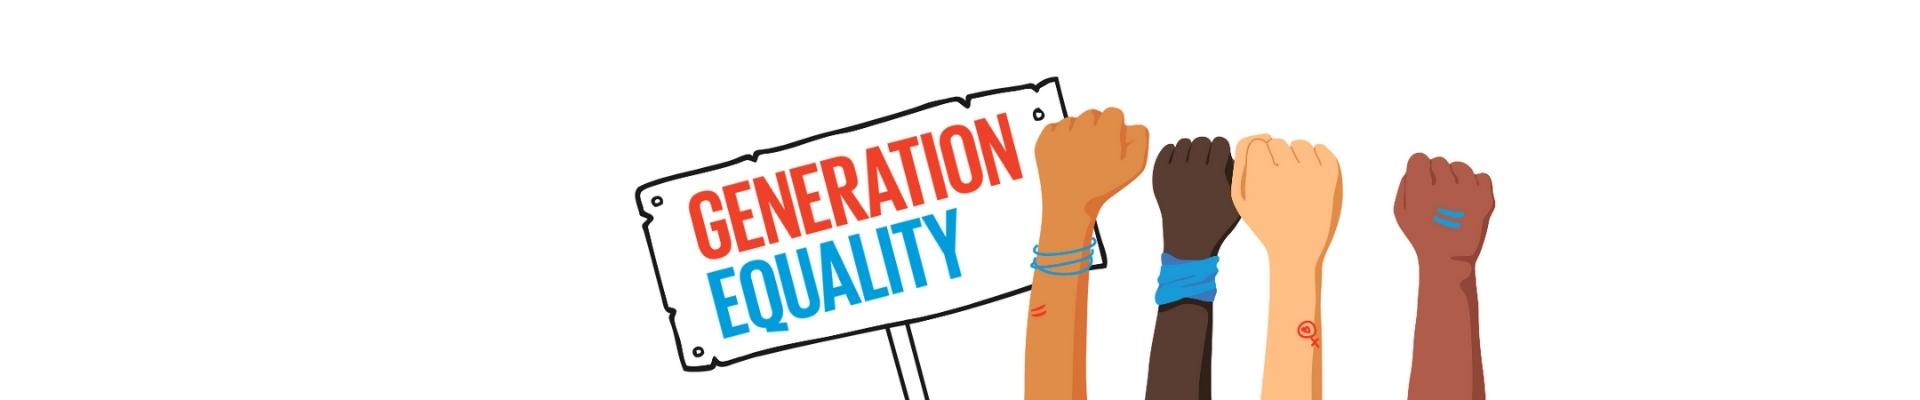 Generation Equality_Hero